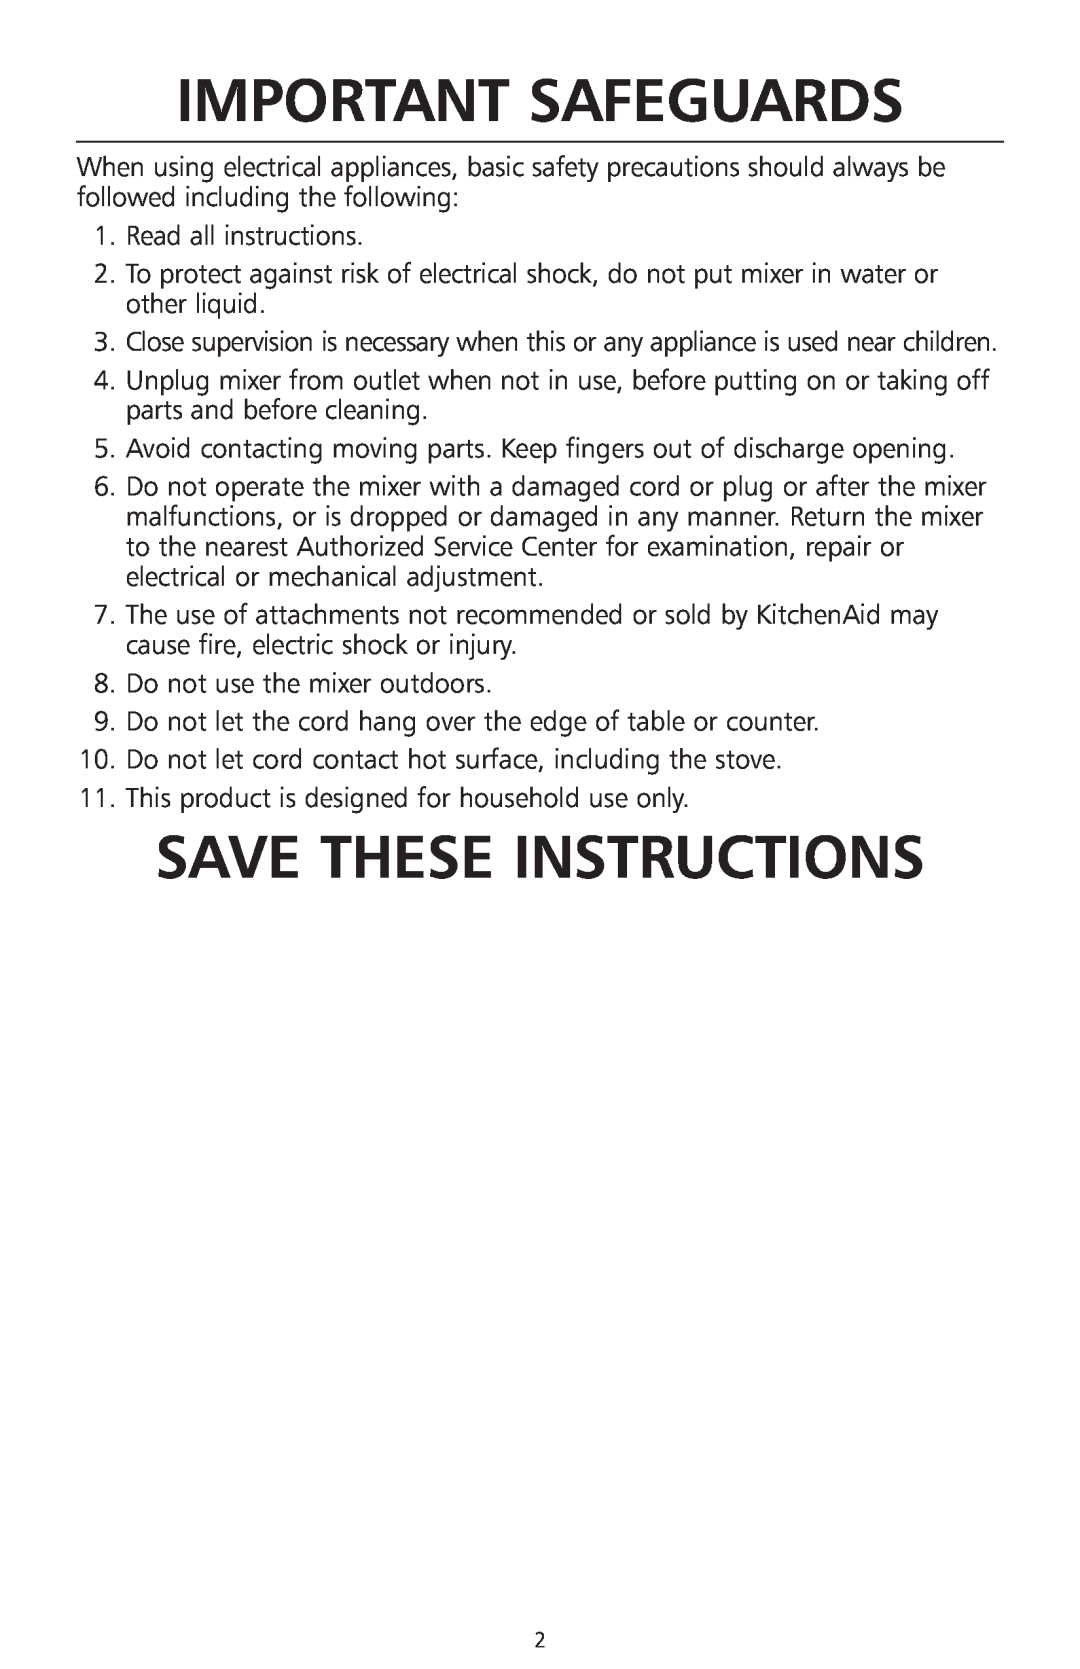 KitchenAid KPRA manual Important Safeguards, Save These Instructions 